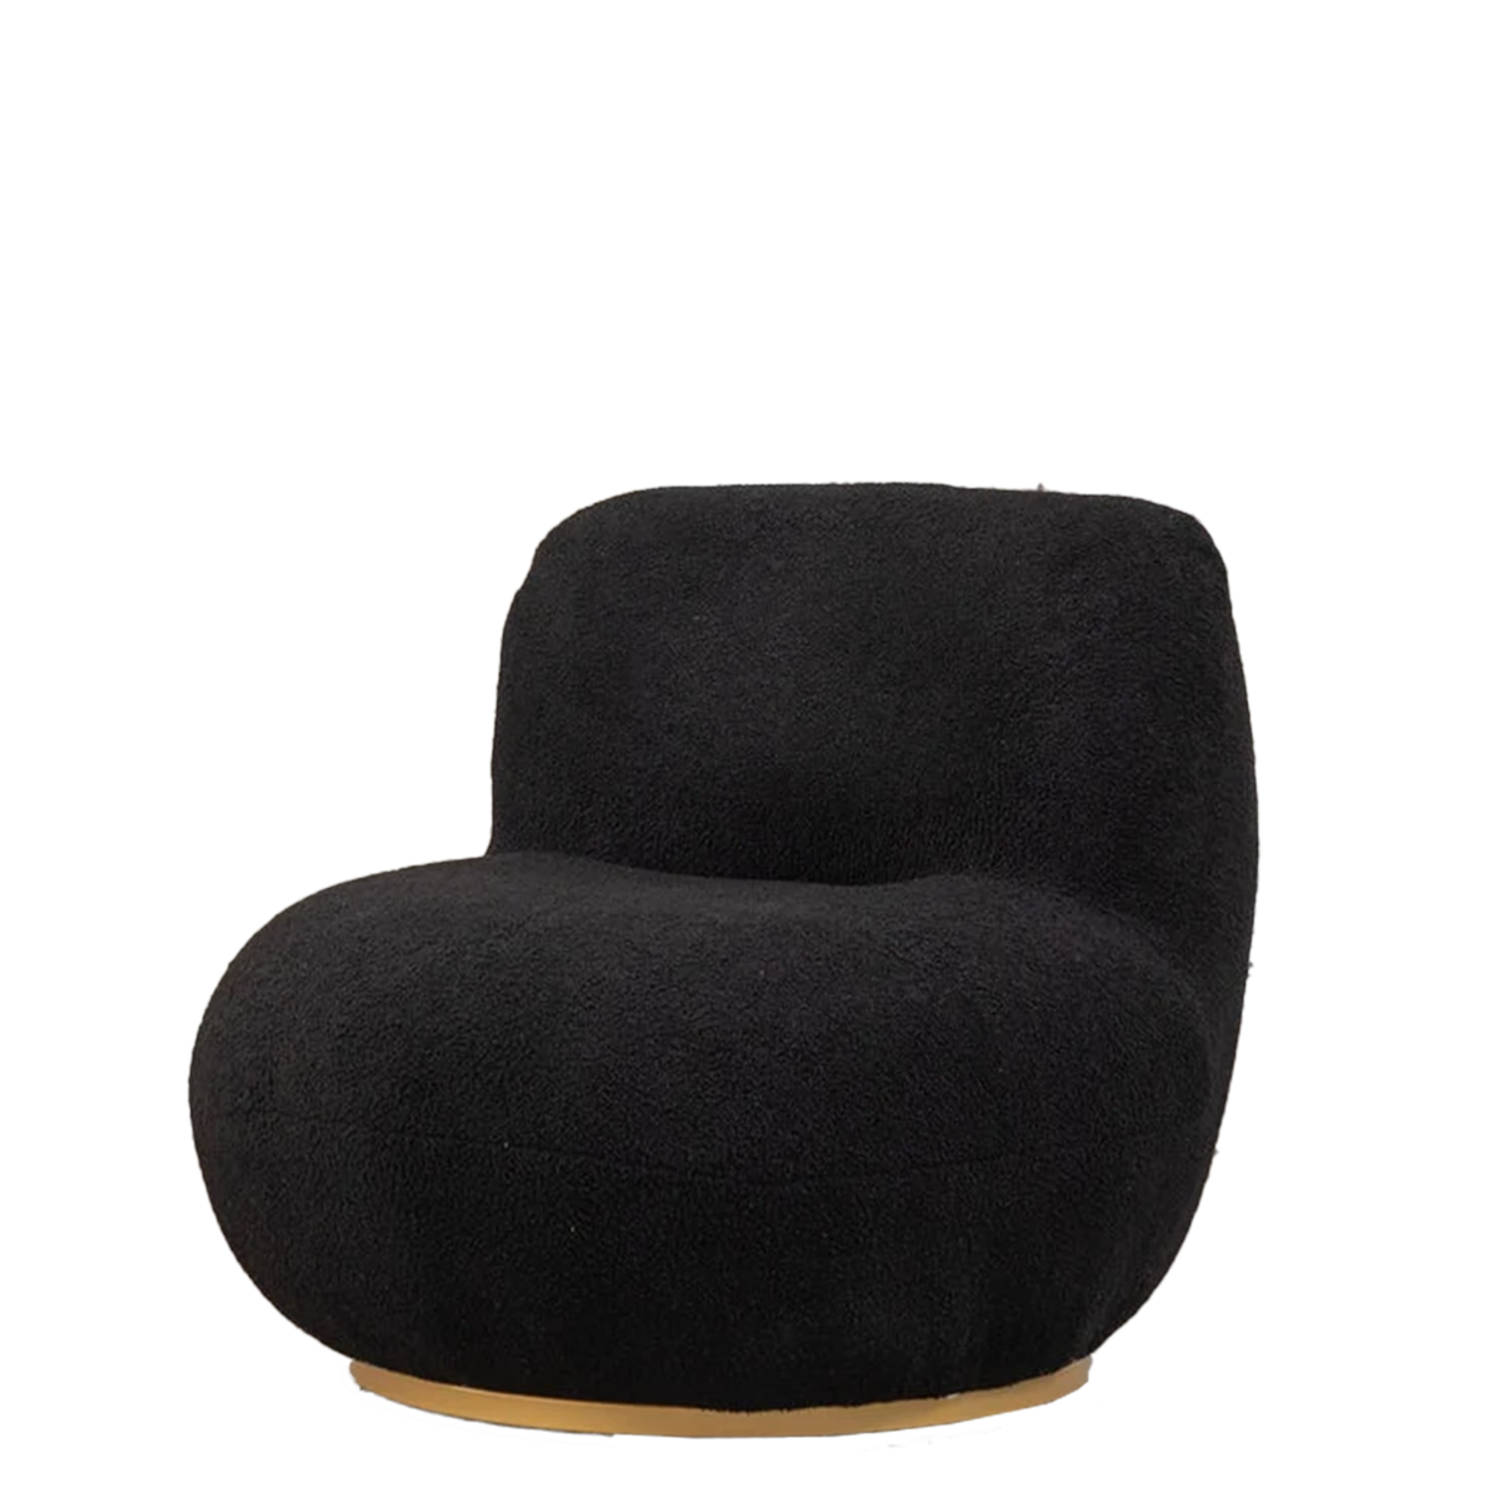 Draai fauteuil Teddy zwart draaibare fauteuil